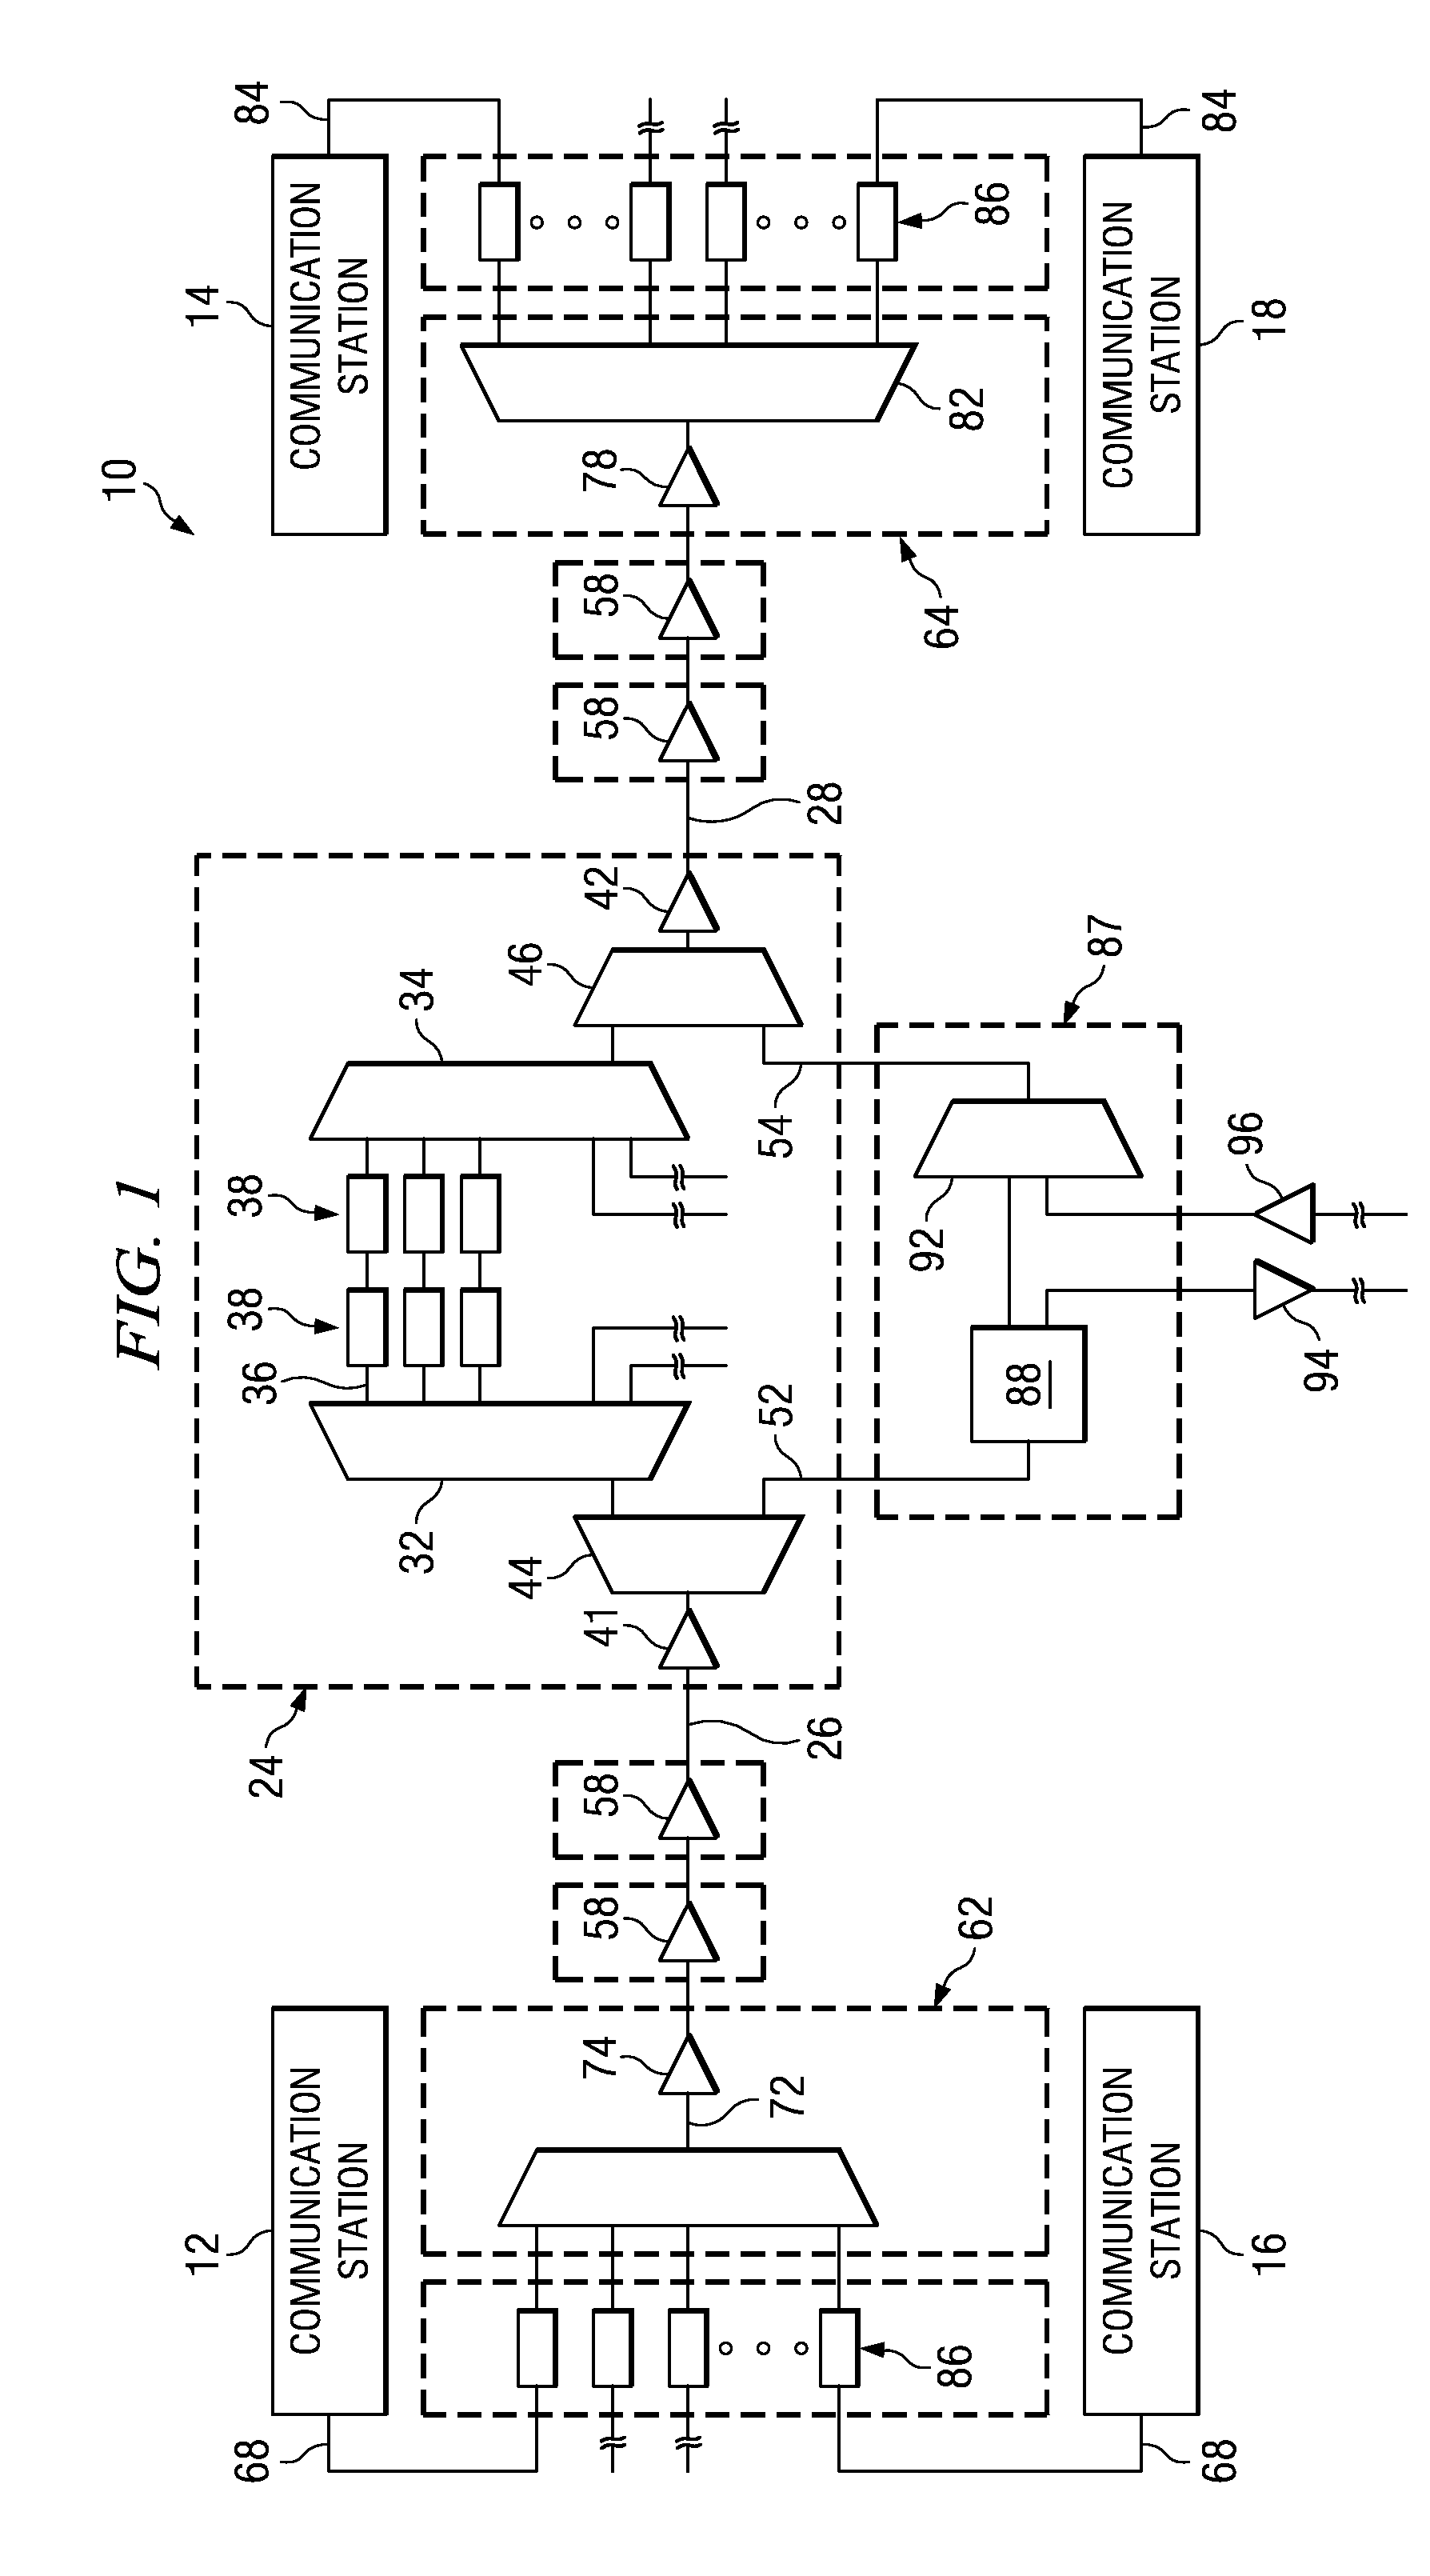 Optical network regenerator bypass module and associated method